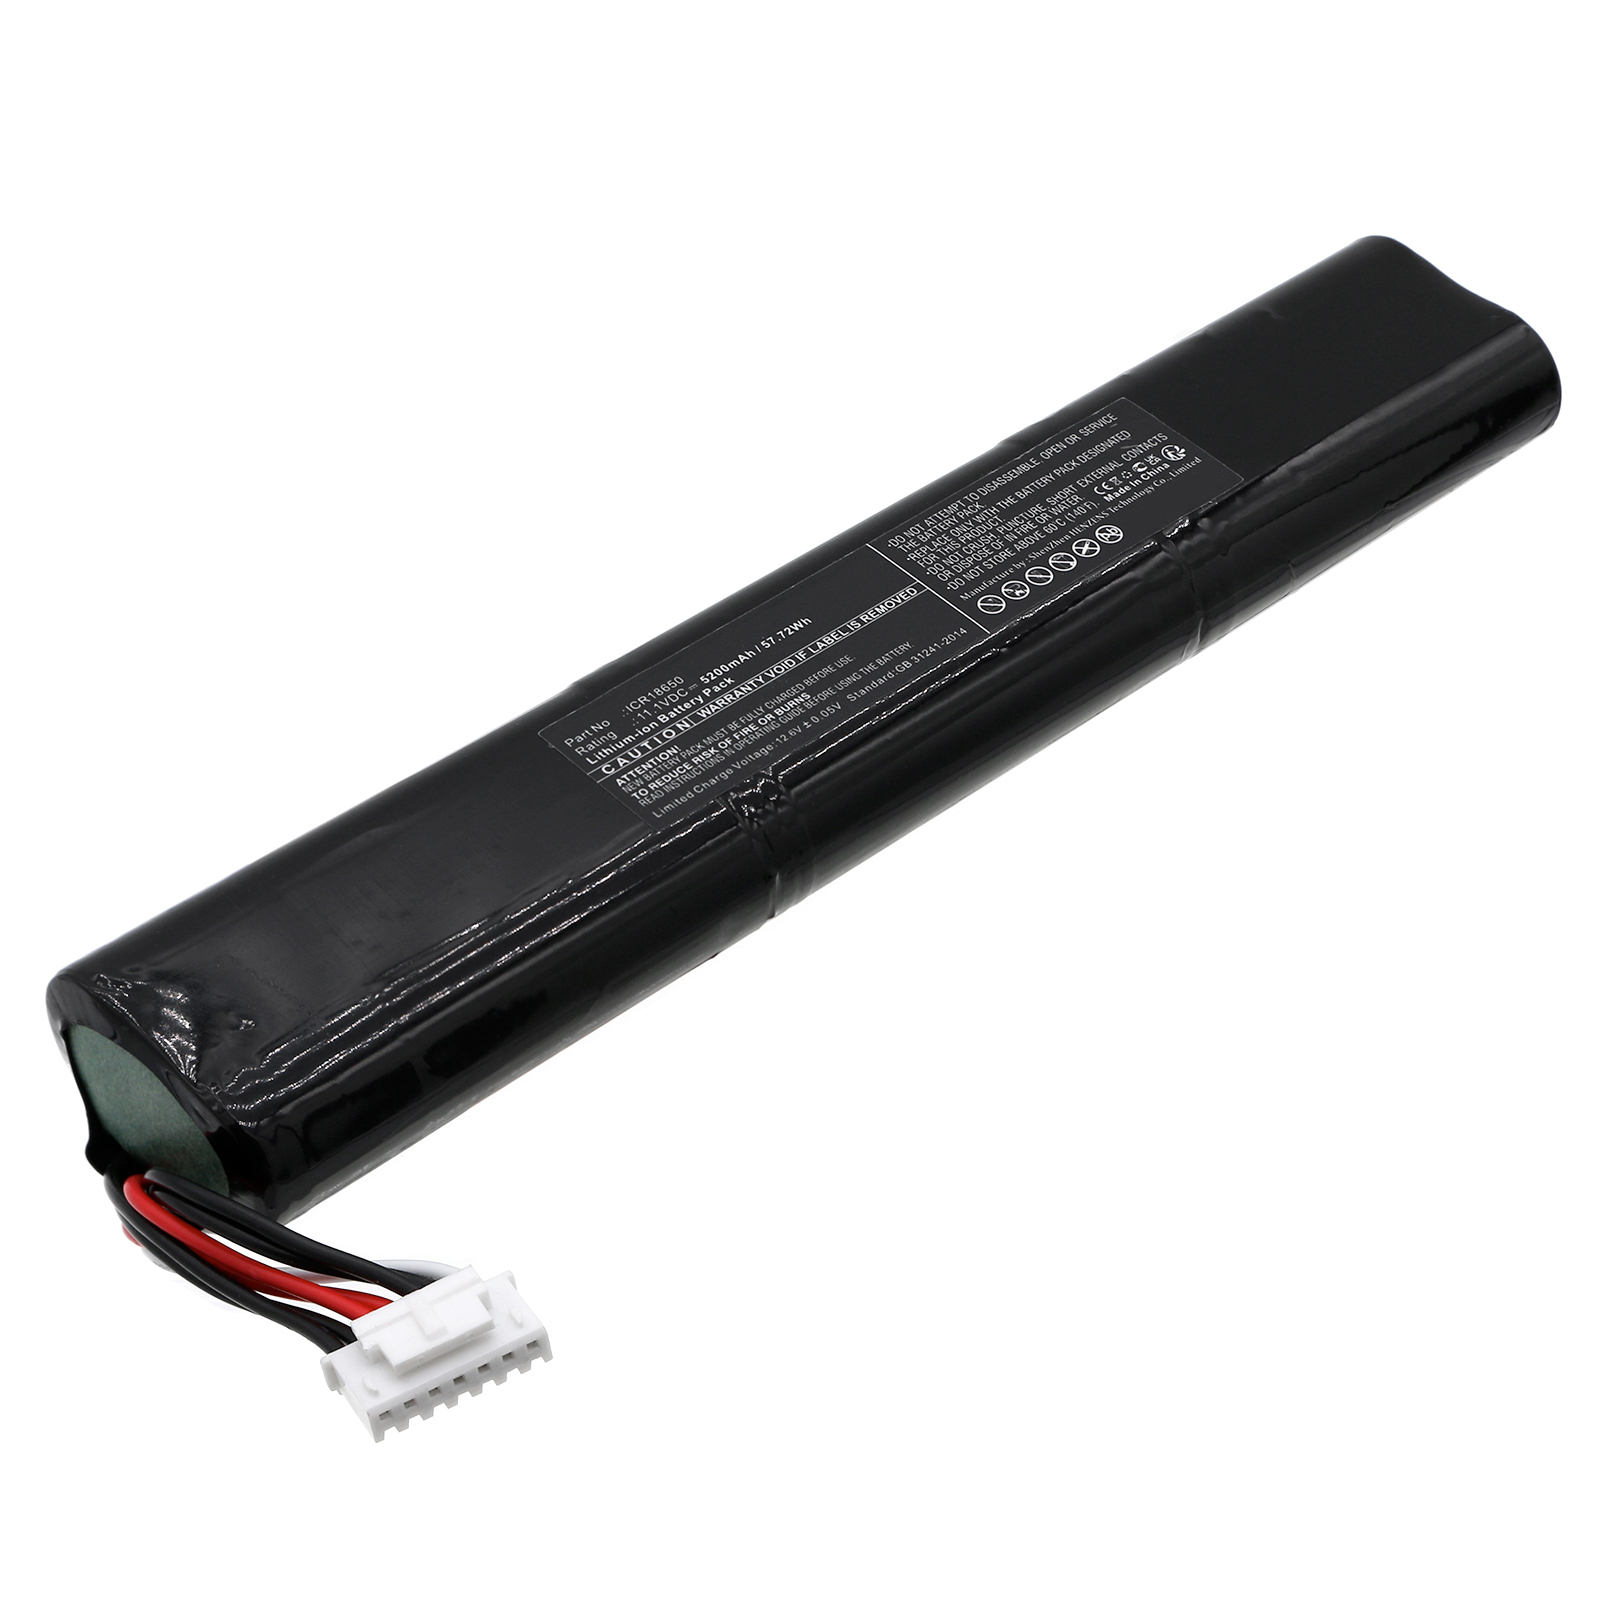 Synergy Digital Speaker Battery, Compatible with Teufel ICR18650 Speaker Battery (Li-ion, 11.1V, 5200mAh)